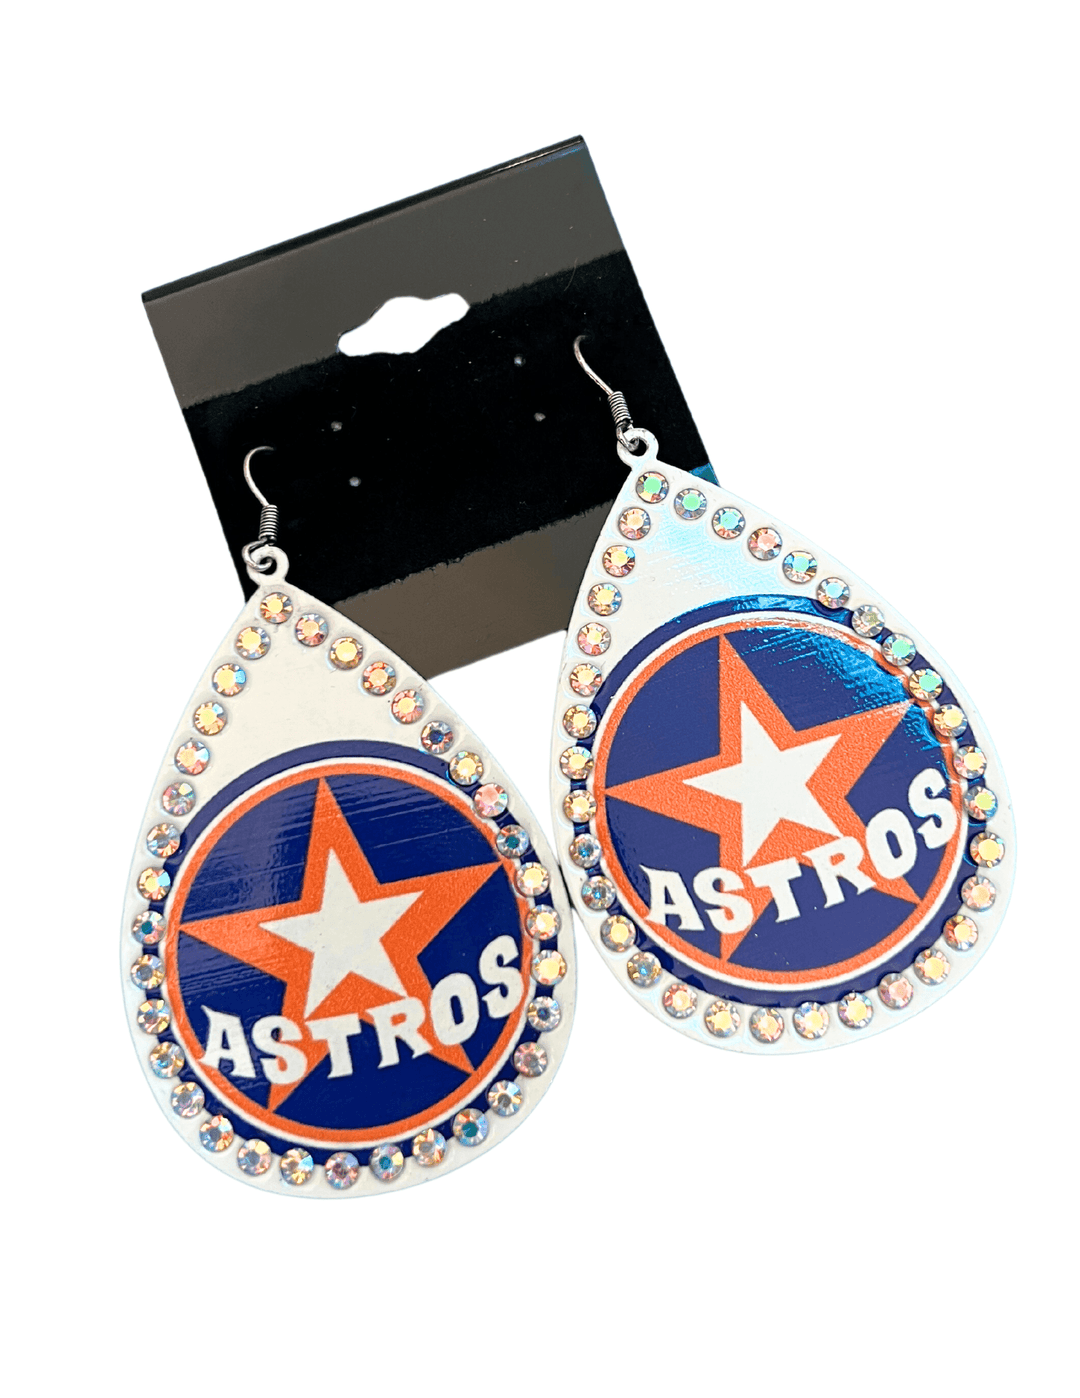 Astros earrings boutique houston